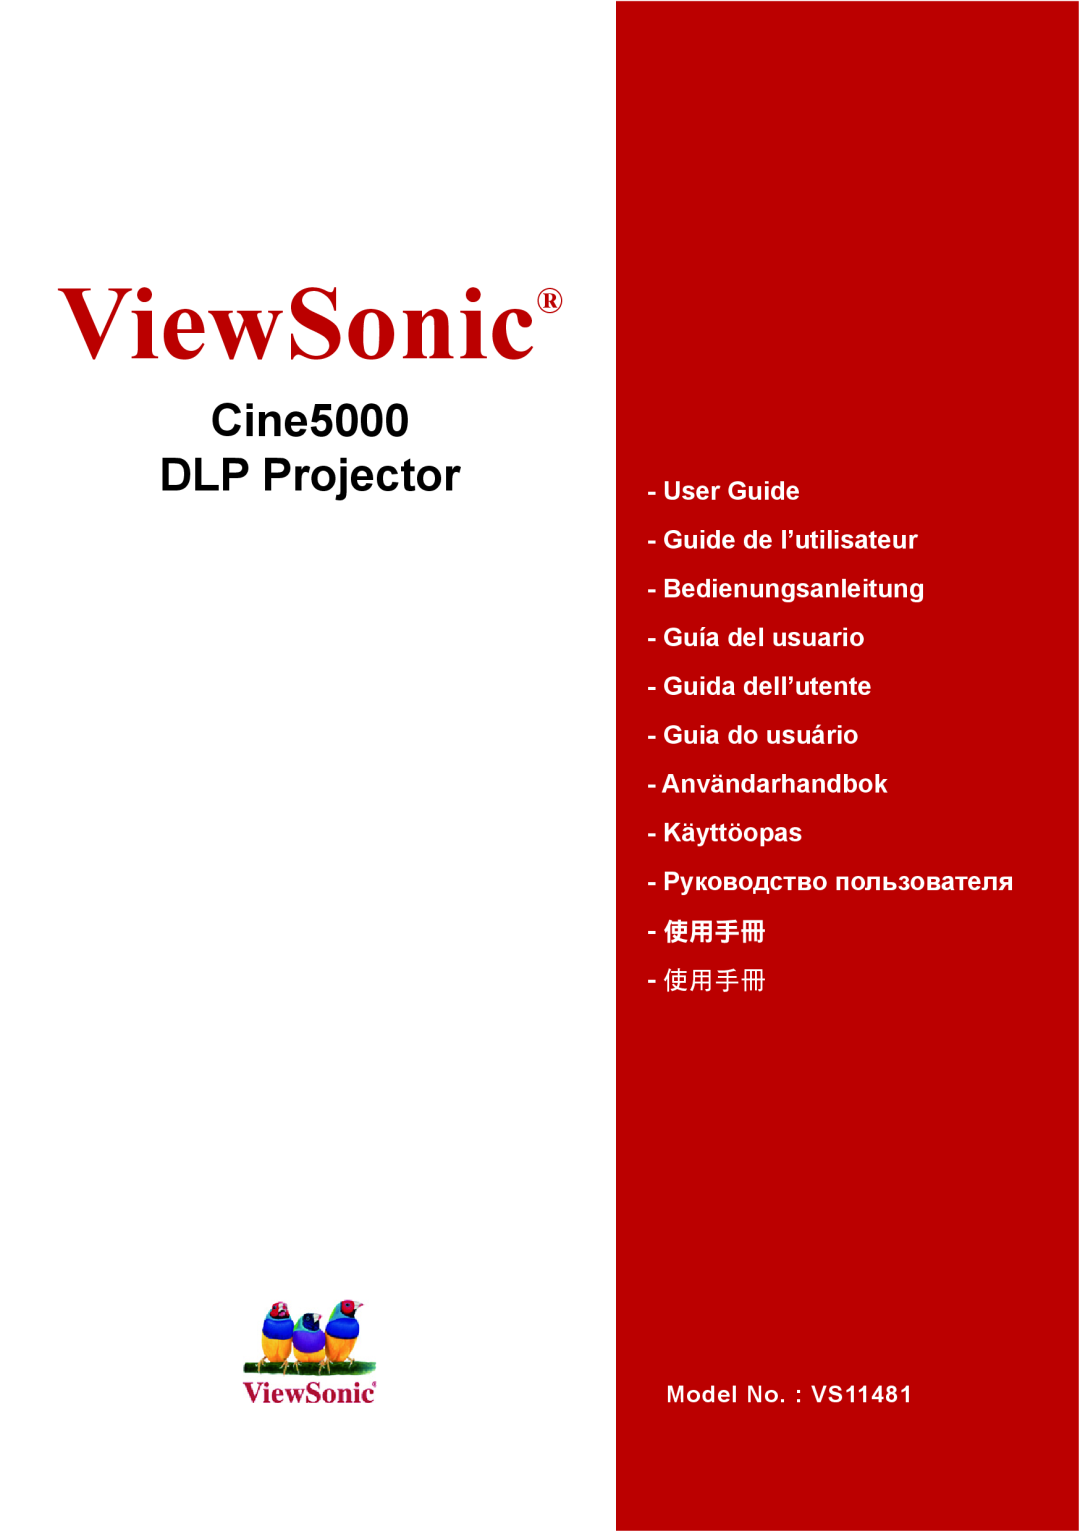 ViewSonic CINE5000 manual ViewSonic, Cine5000 DLP Projector, User Guide Guide de l’utilisateur Bedienungsanleitung 